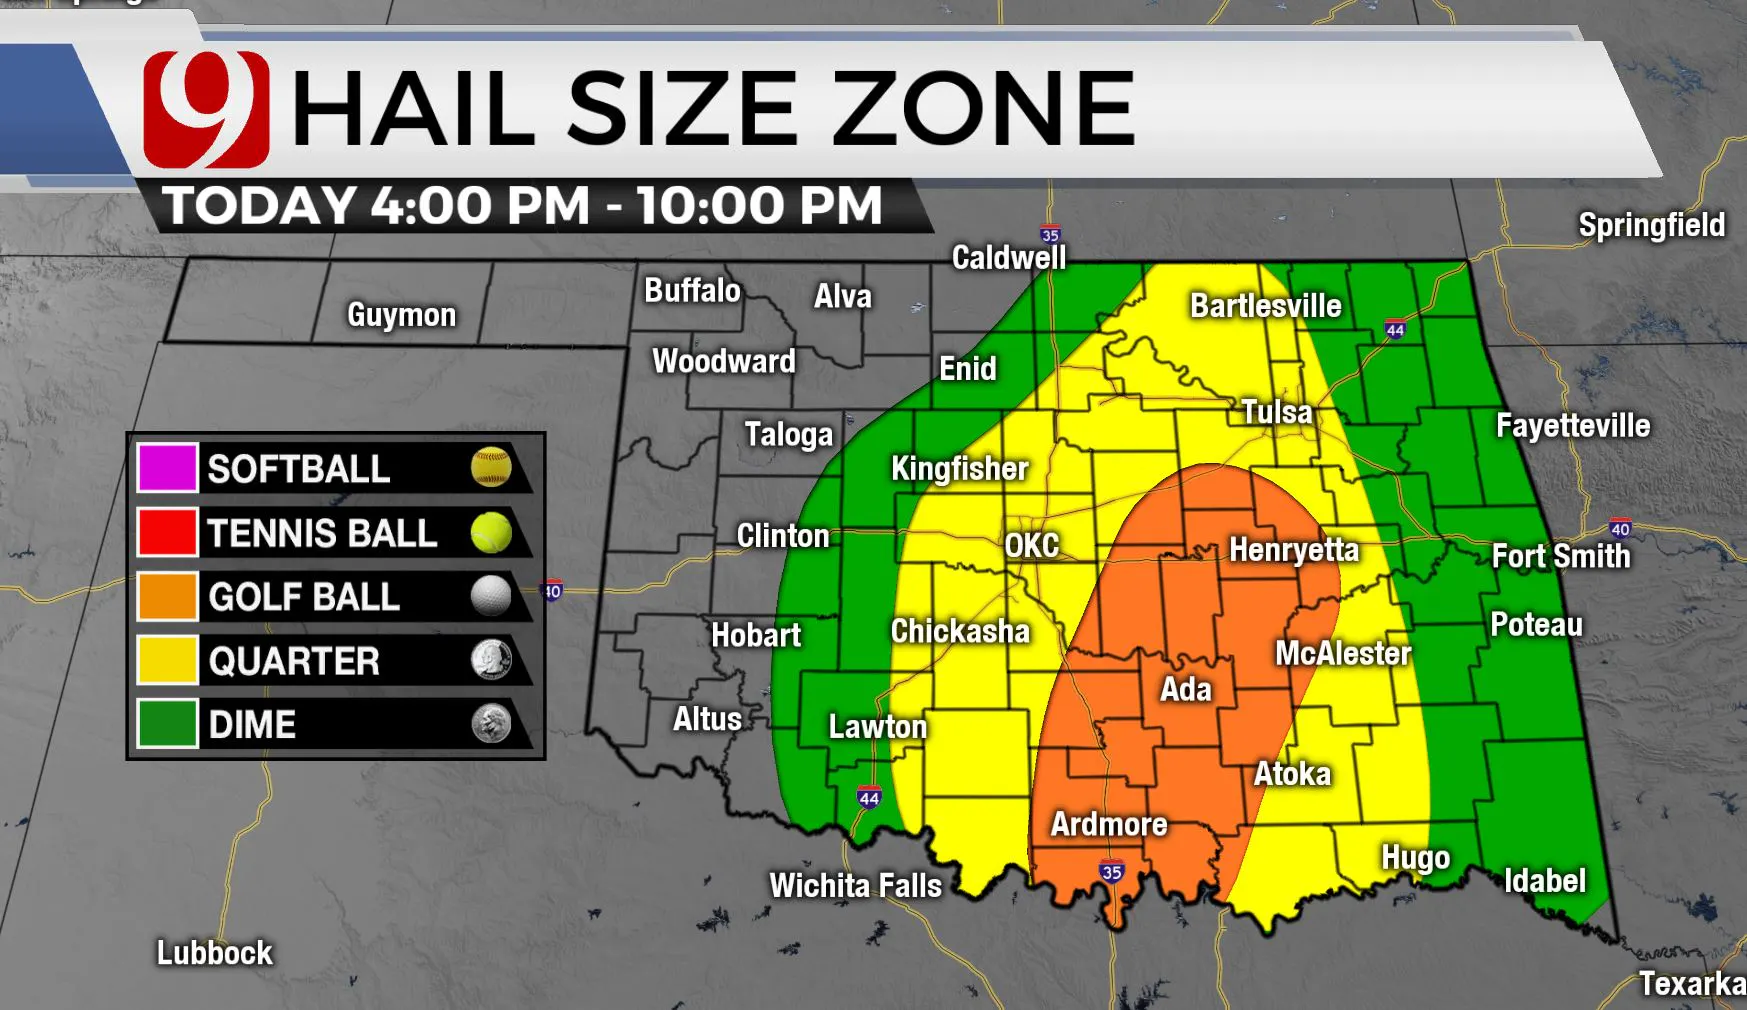 Hail Size zone